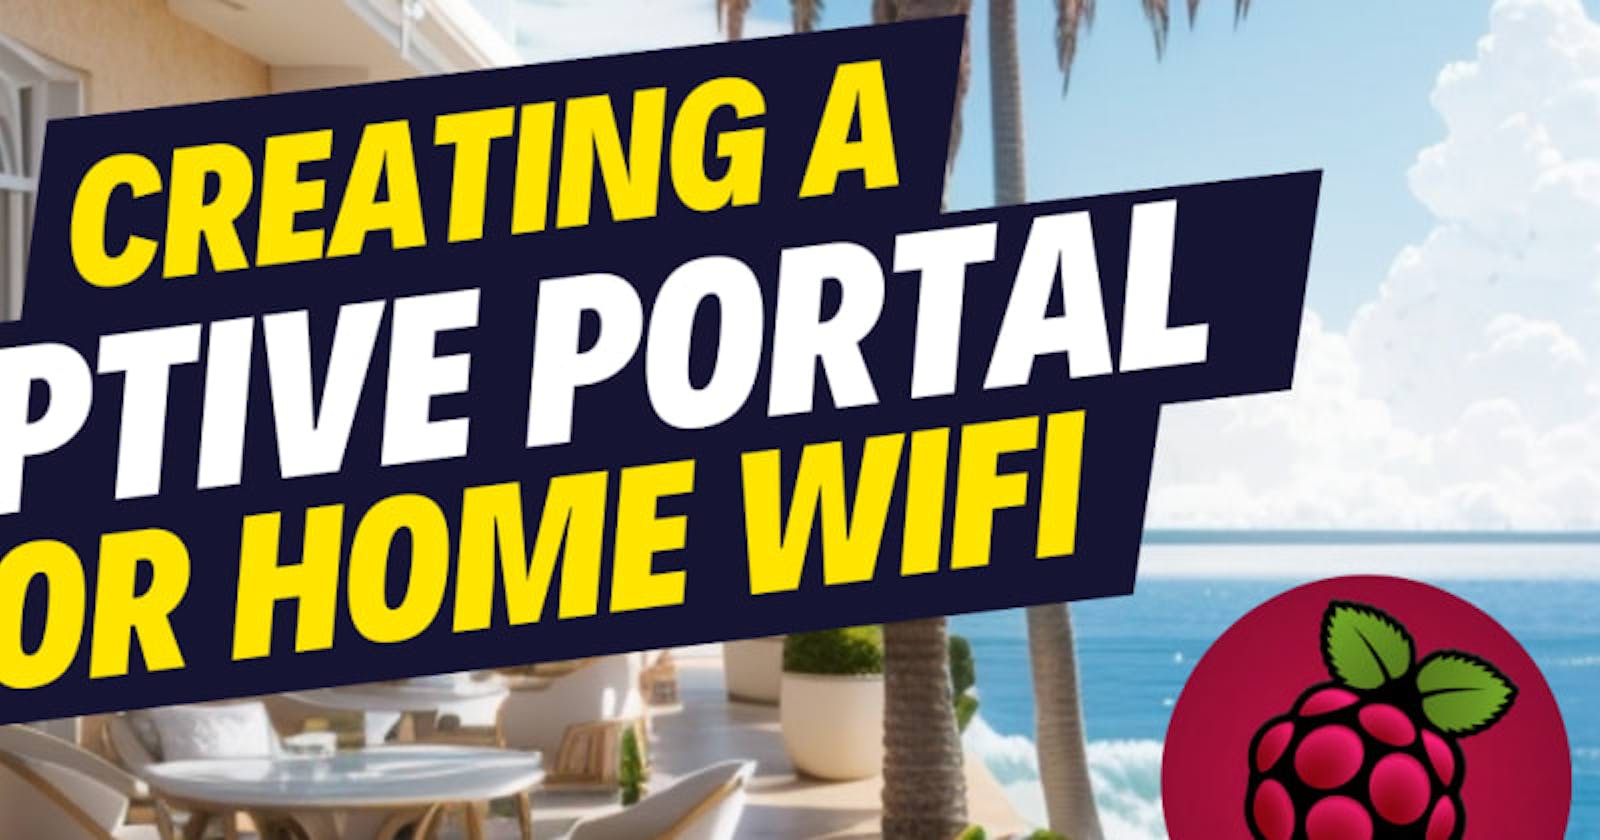 Creating a Custom Captive Portal for Home WiFi with Raspberry Pi and AI Magic